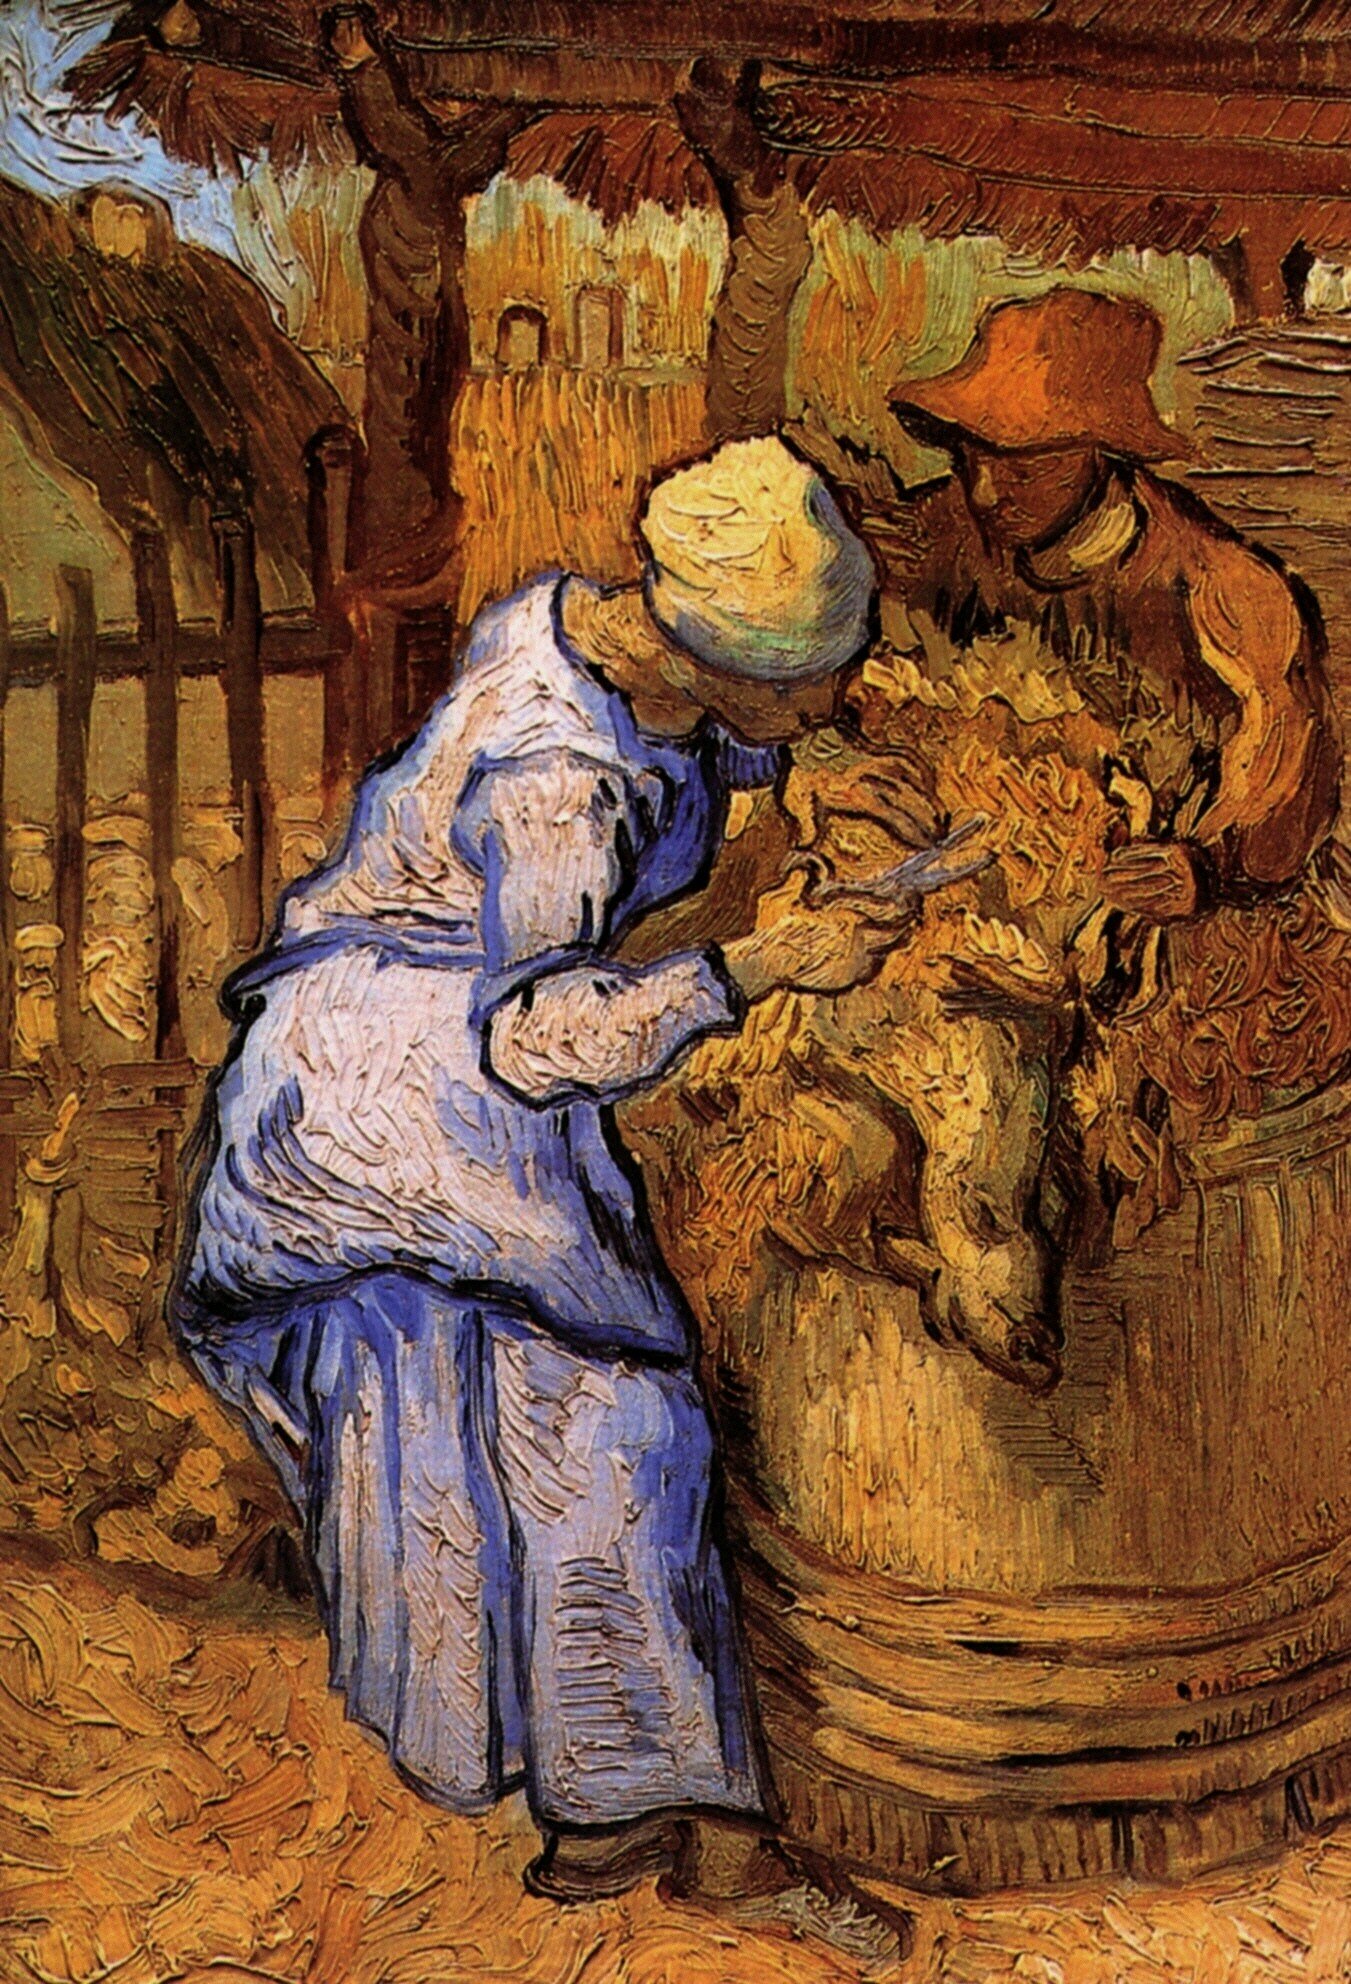  Ван Гог  Стрижка овец (по картине Жан Франсуа Милле)